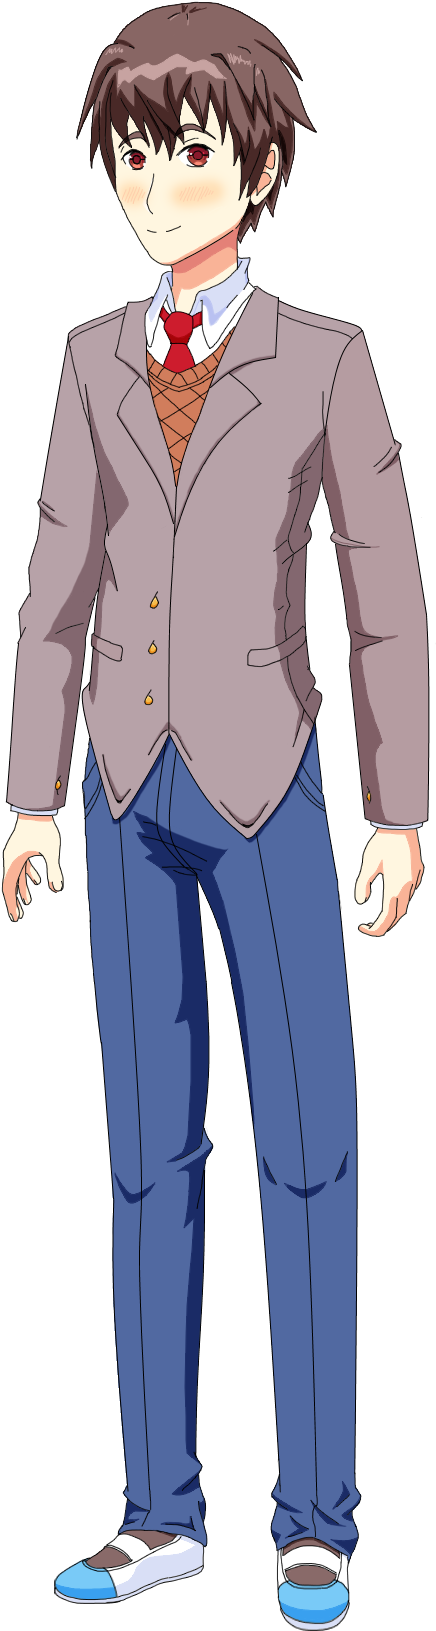 Animated Teenage Boyin Casual Suit PNG image